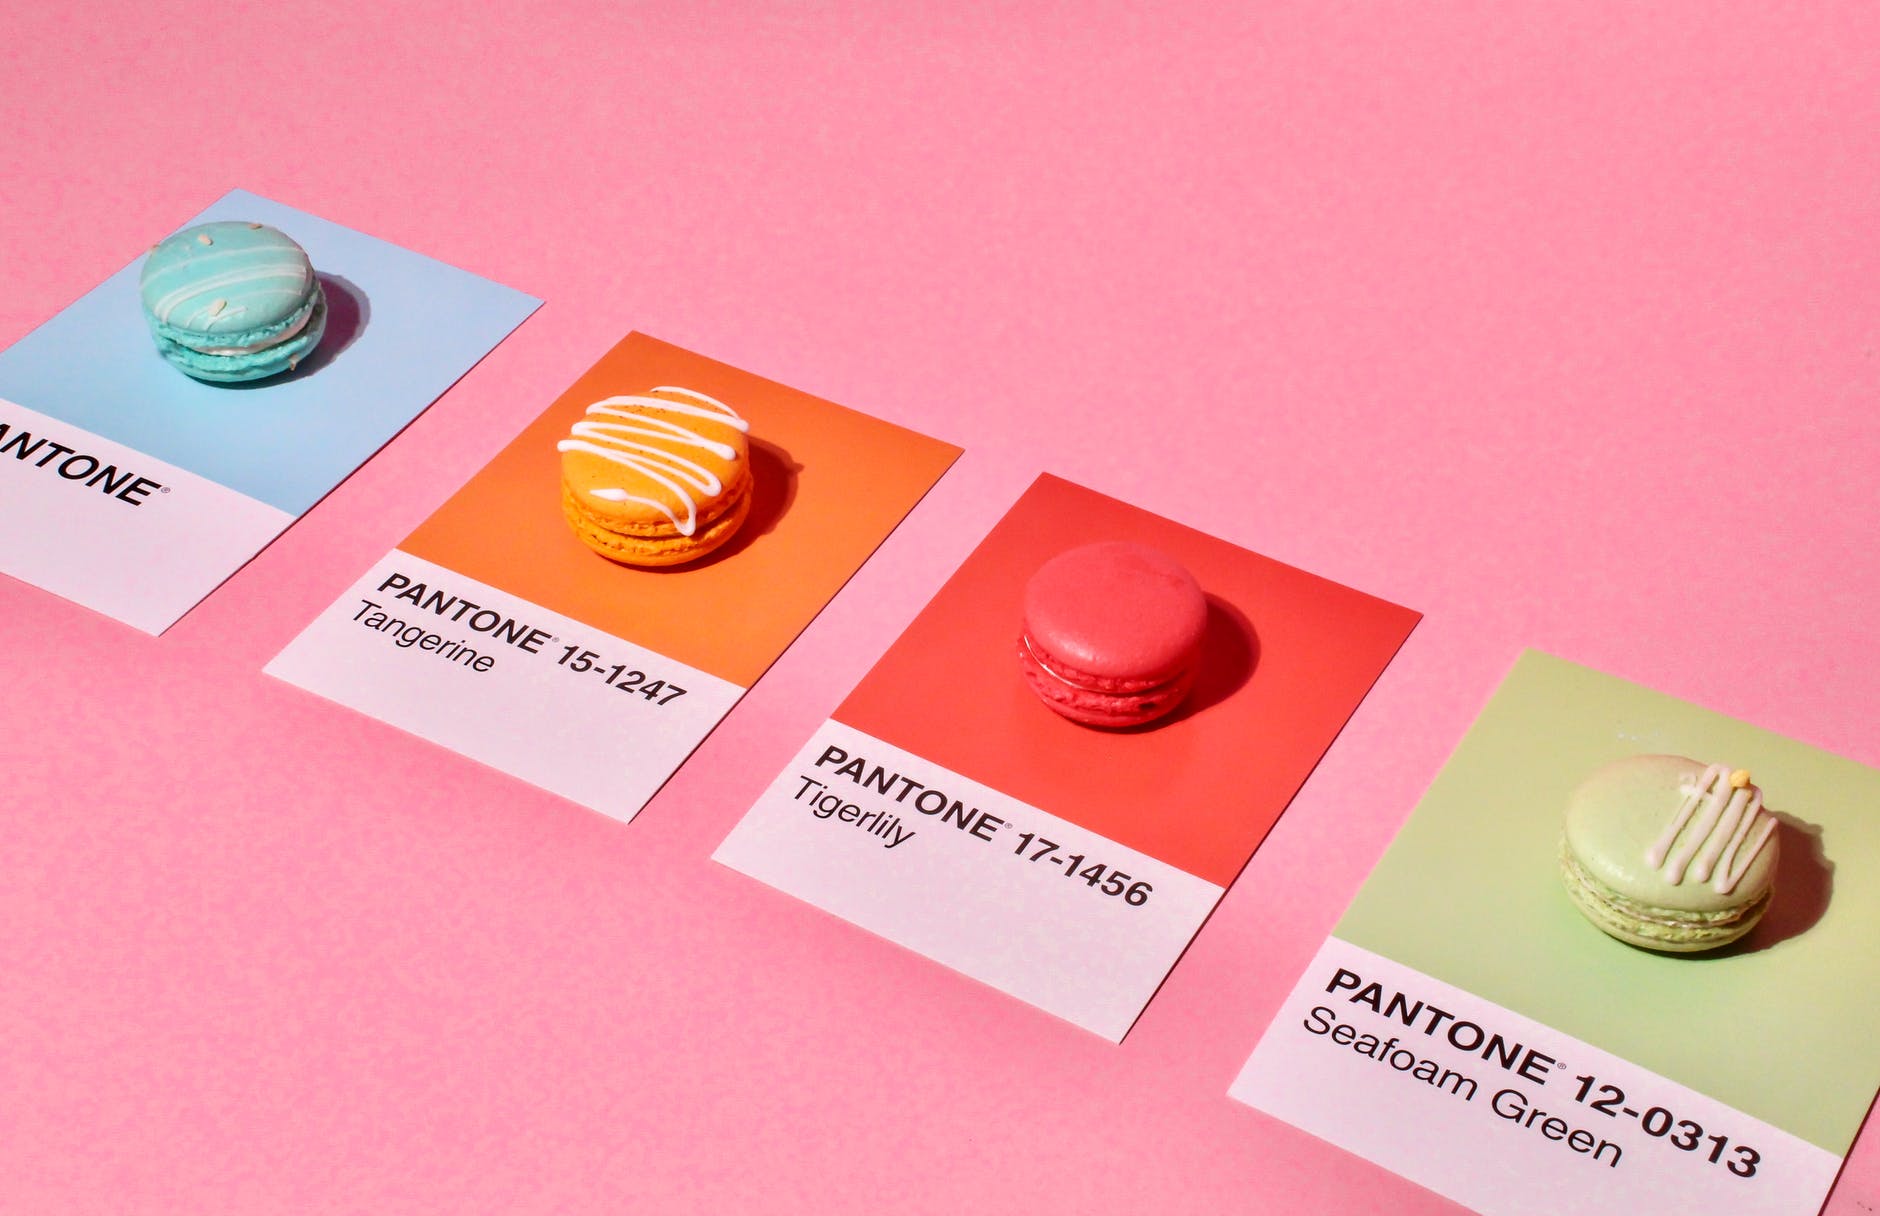 french macarons on pantone cards